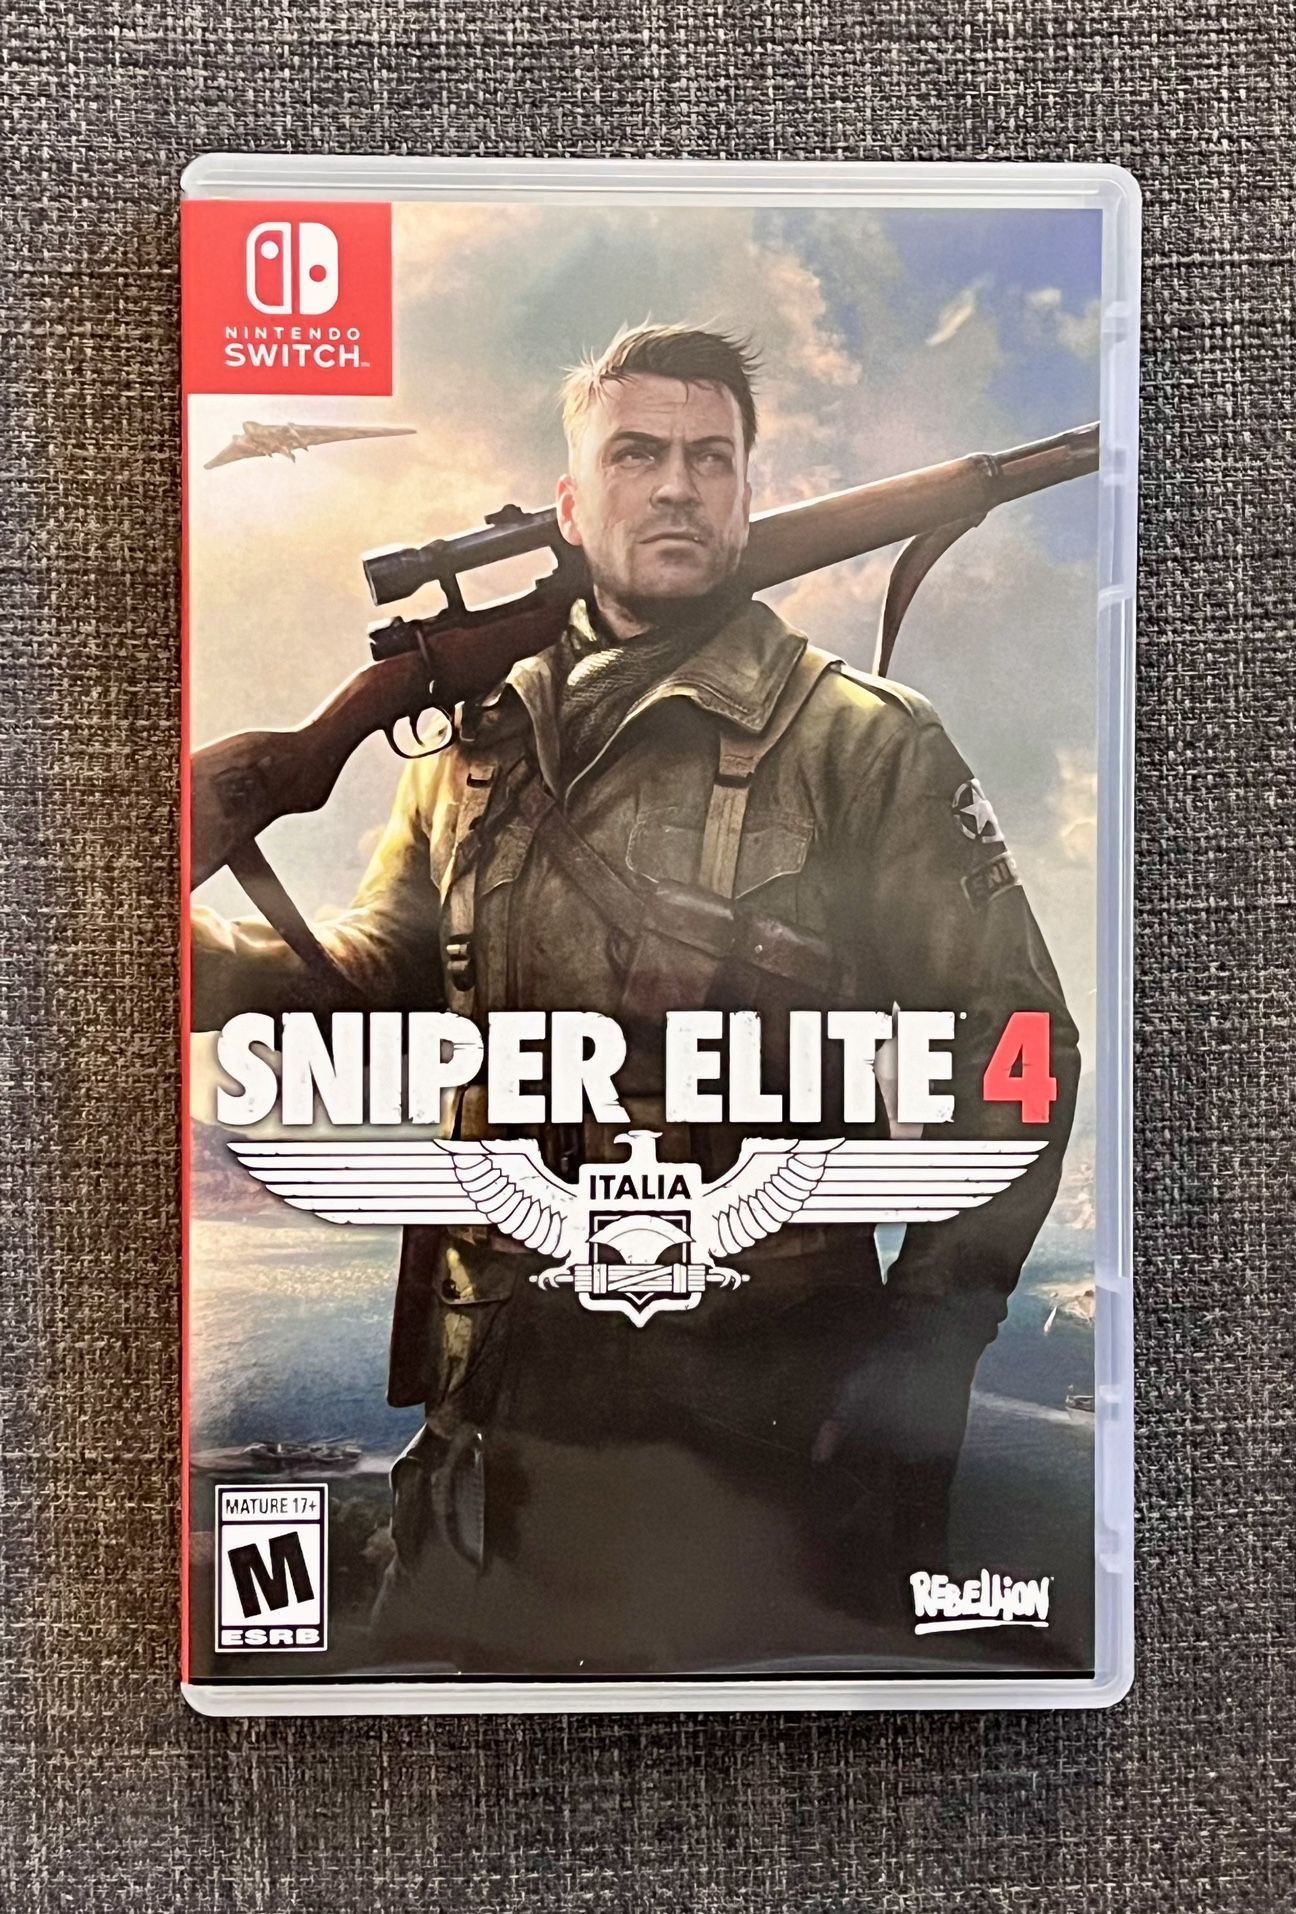 Sniper Elite 4 (Nintendo Switch, 2020)